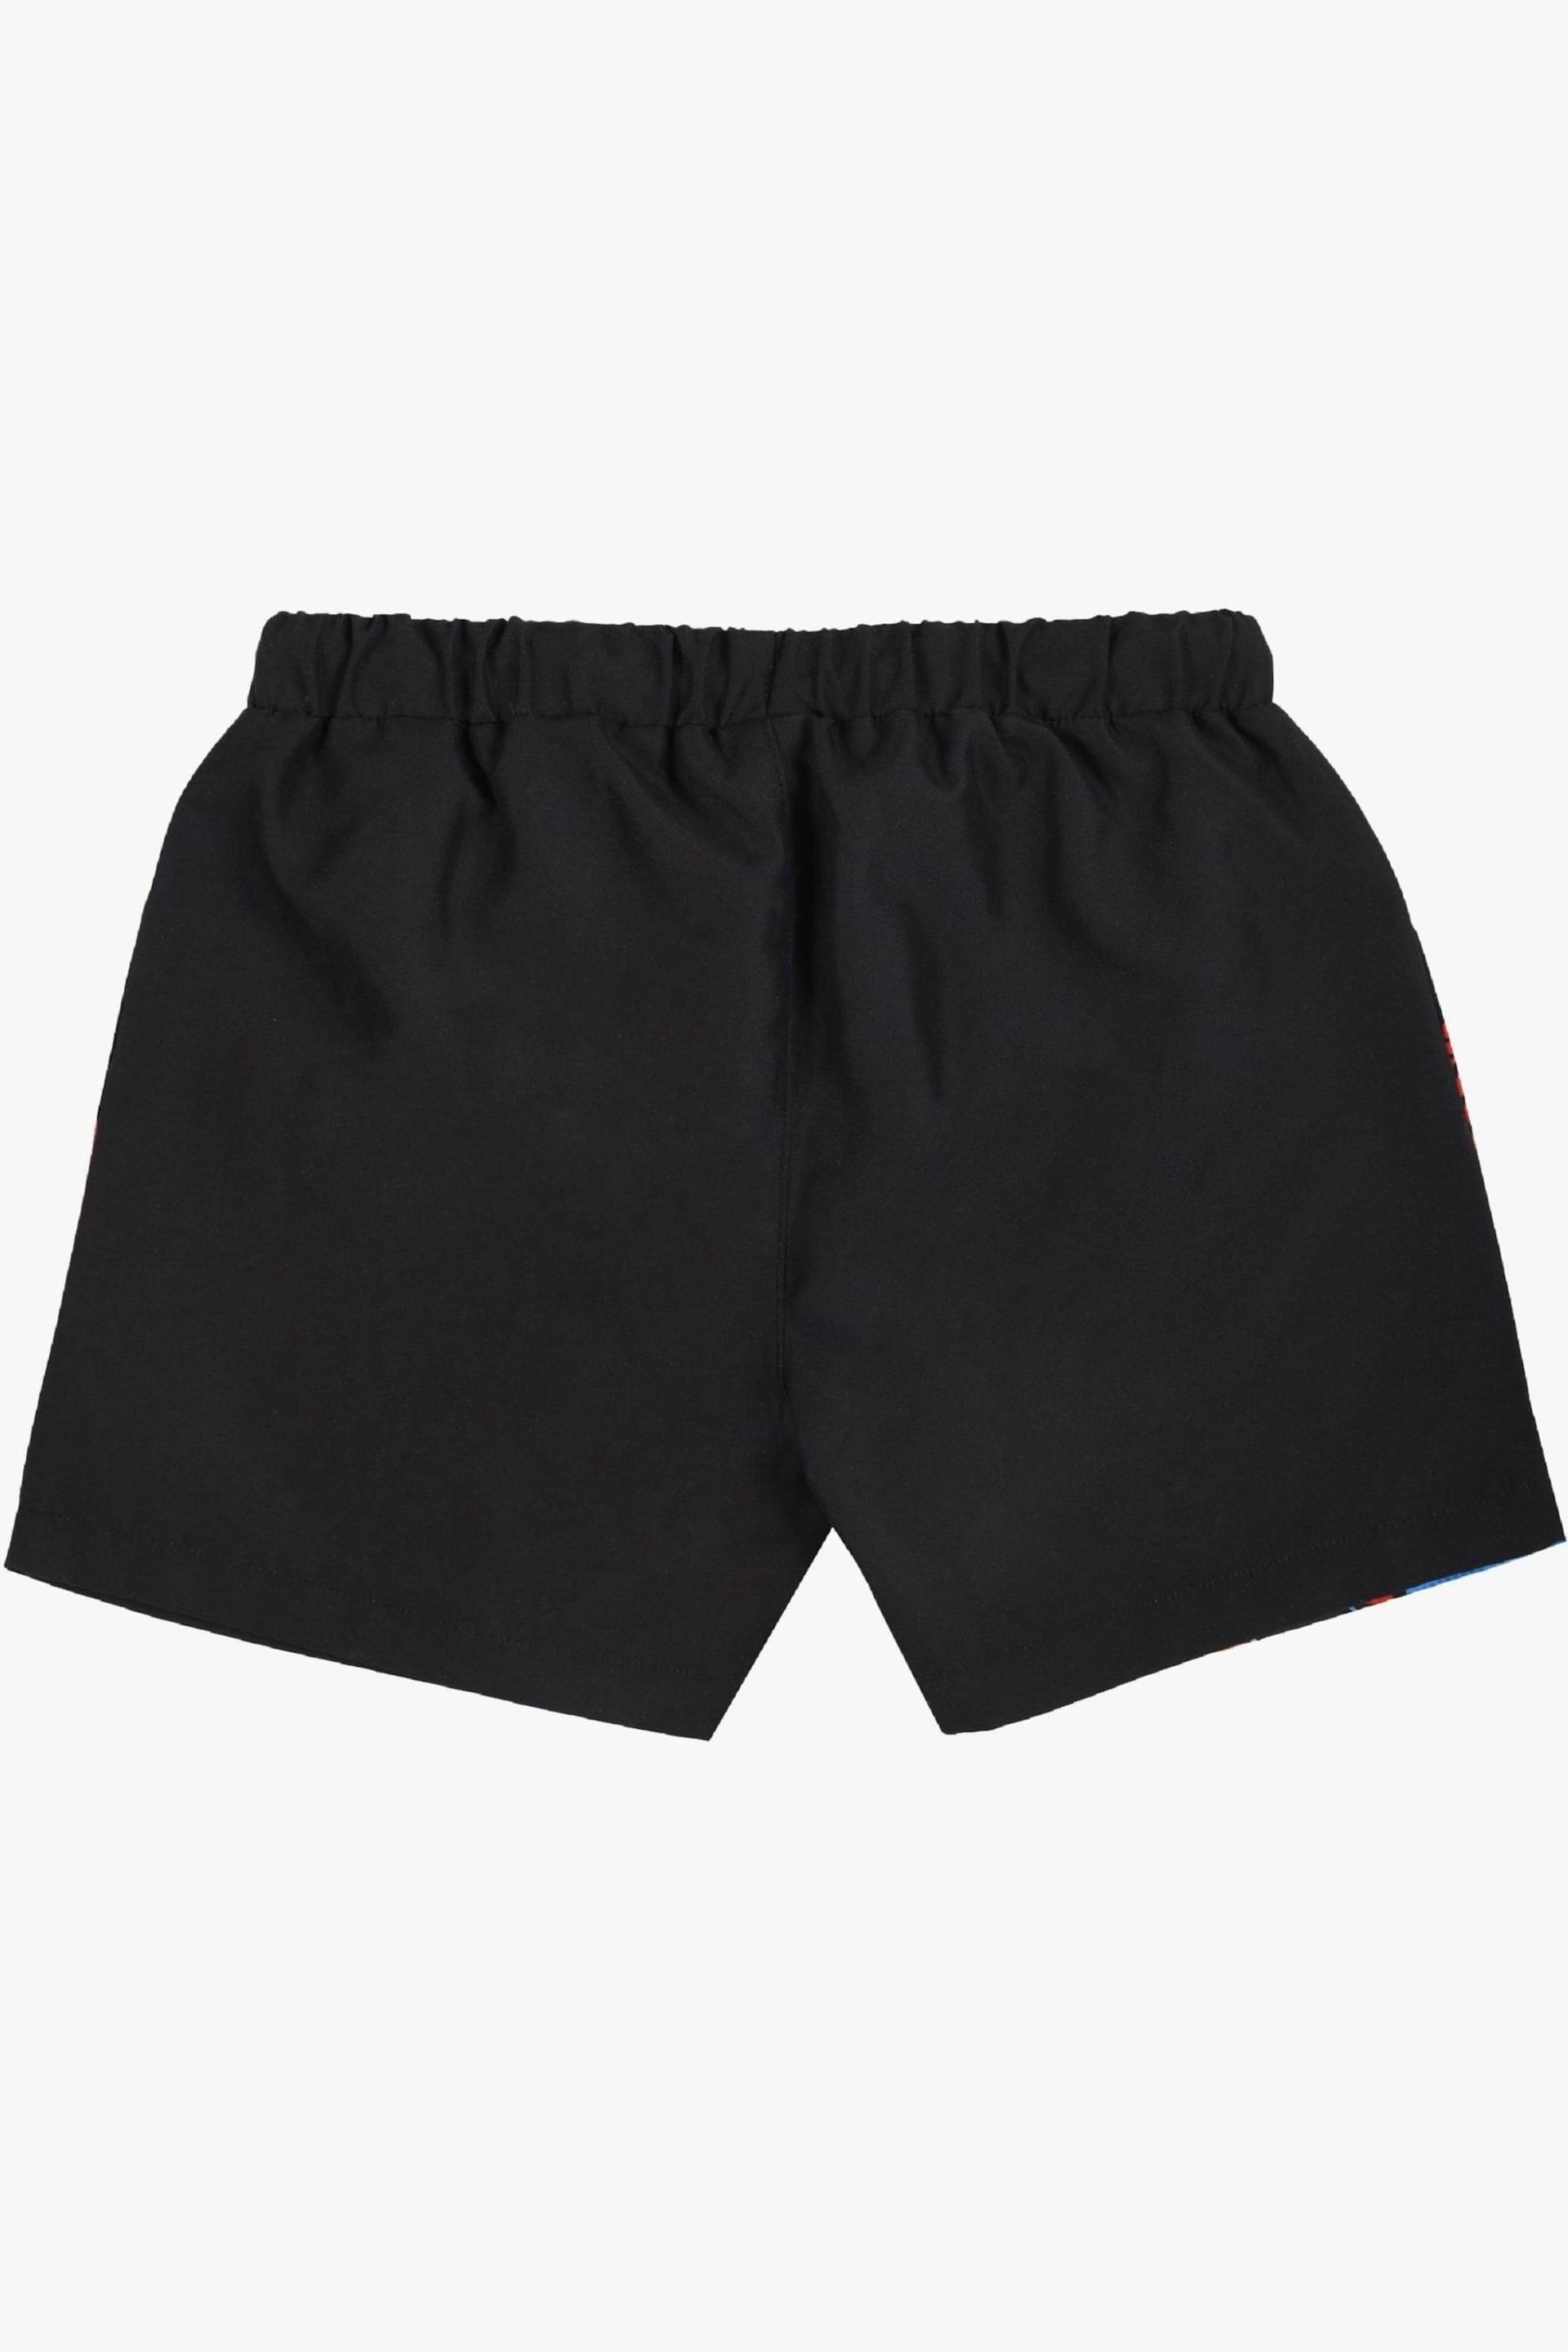 Brand Threads Black Spiderman Boys Swim Shorts - Image 2 of 4